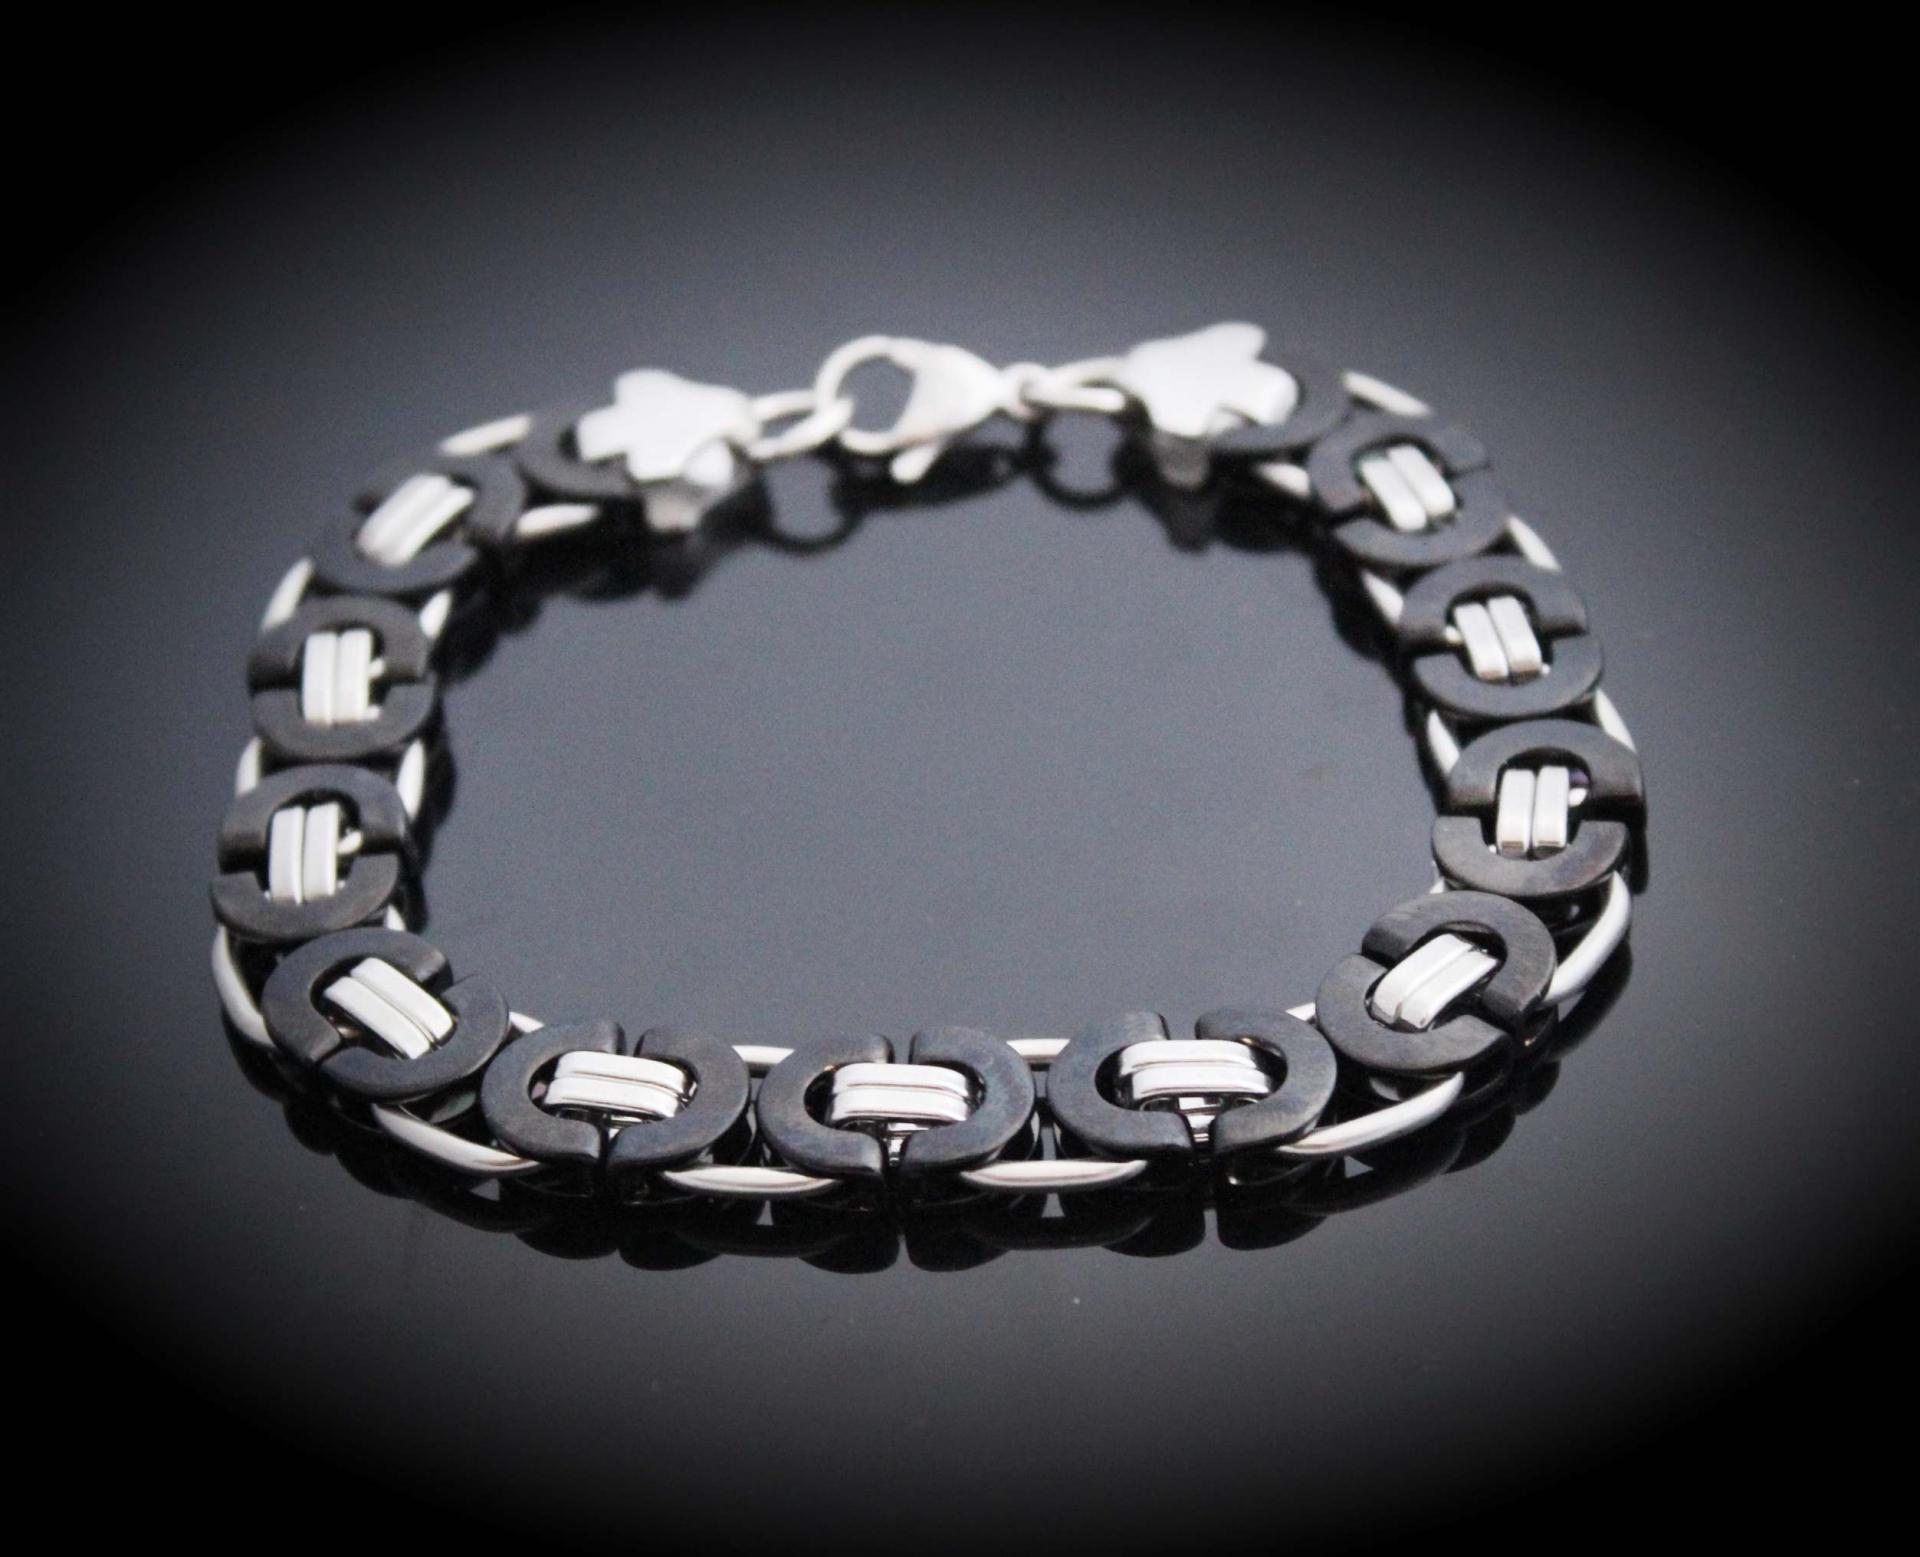 Stainless Steel Half Circle Black & Silver Link Chain Bracelet